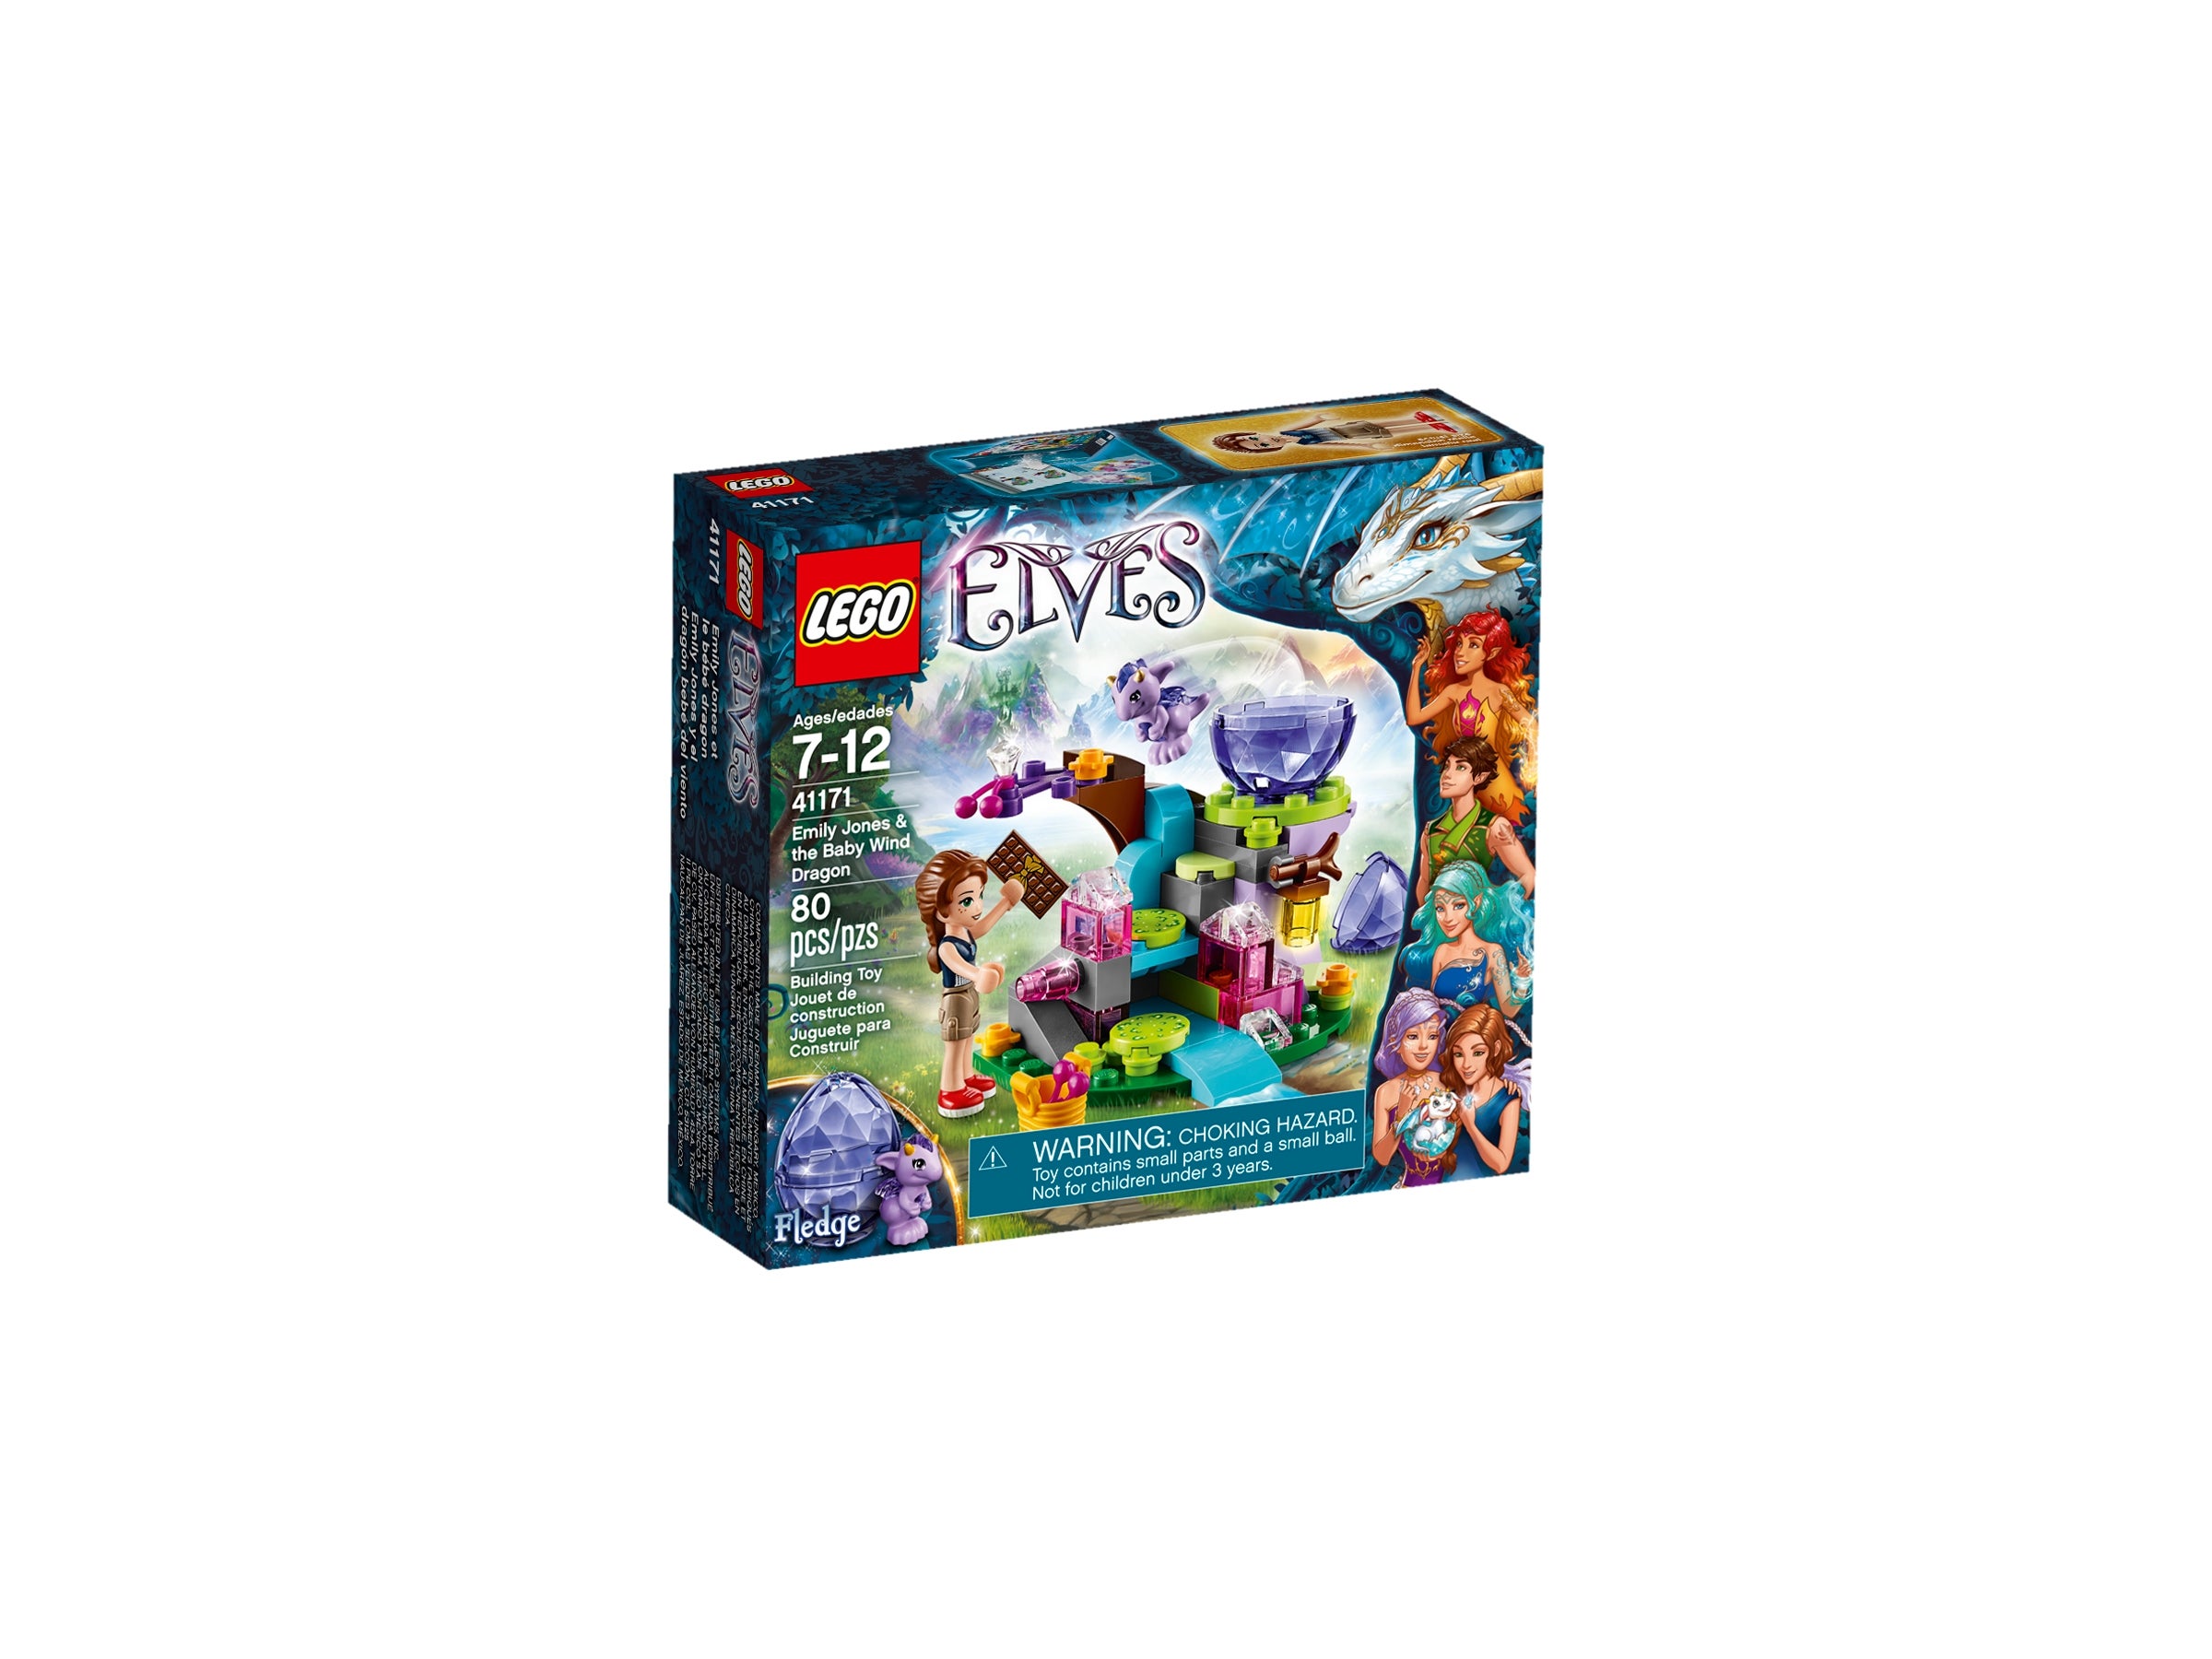 LEGO Elves 41171 Emily Jones & The Baby Wind Dragon 80pcs 2016 Fledge for sale online